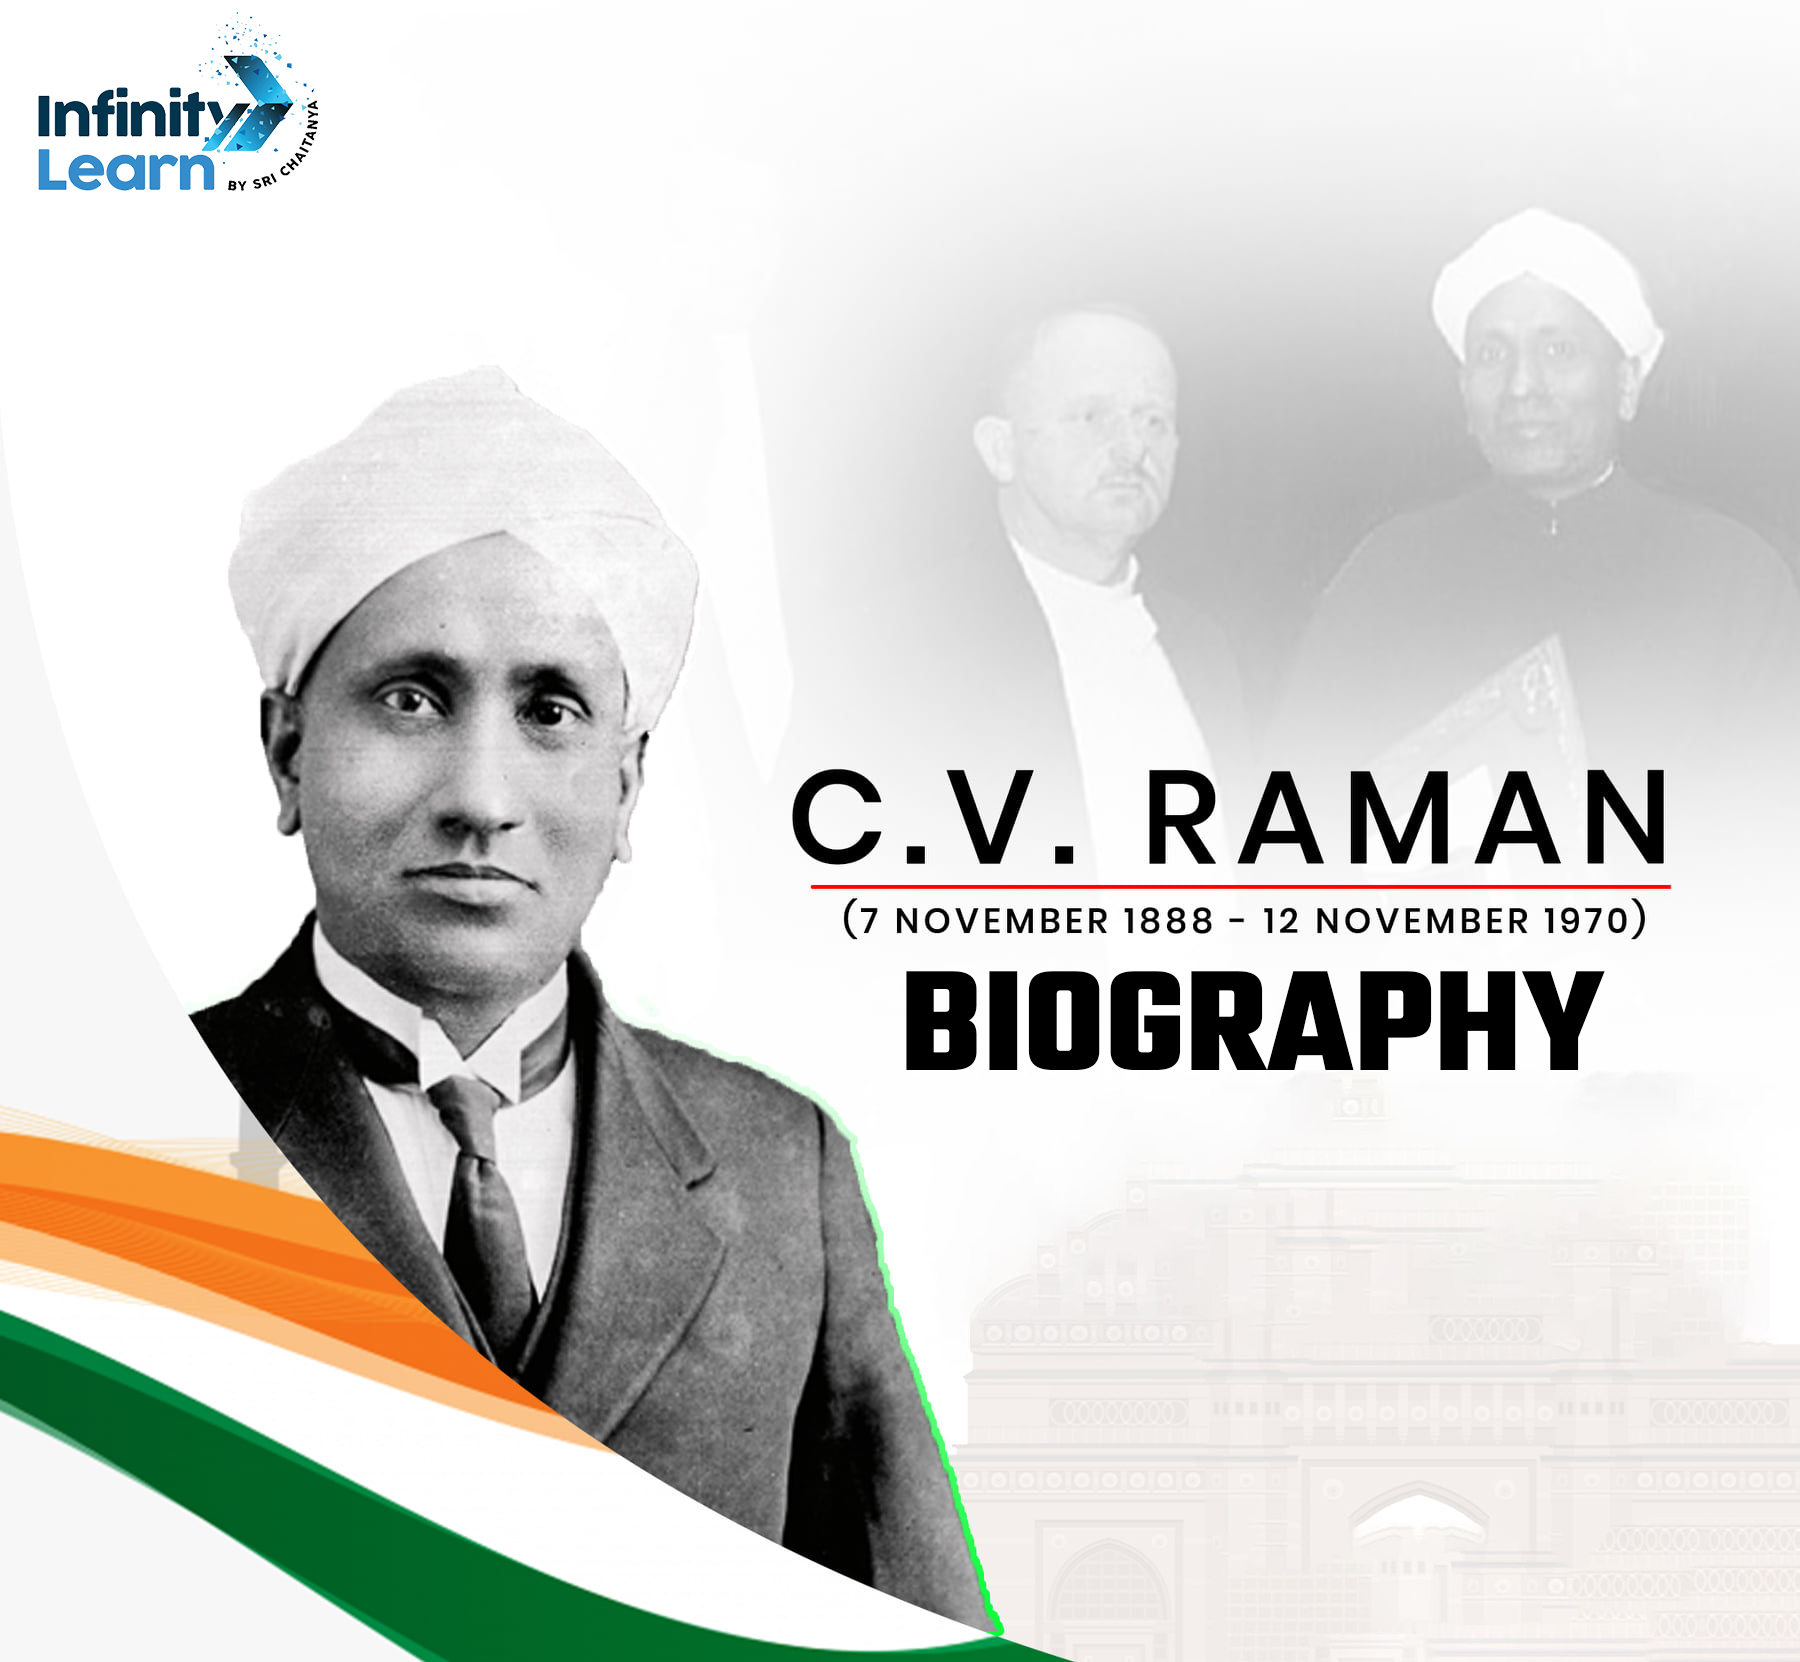 C.V. Raman Biography